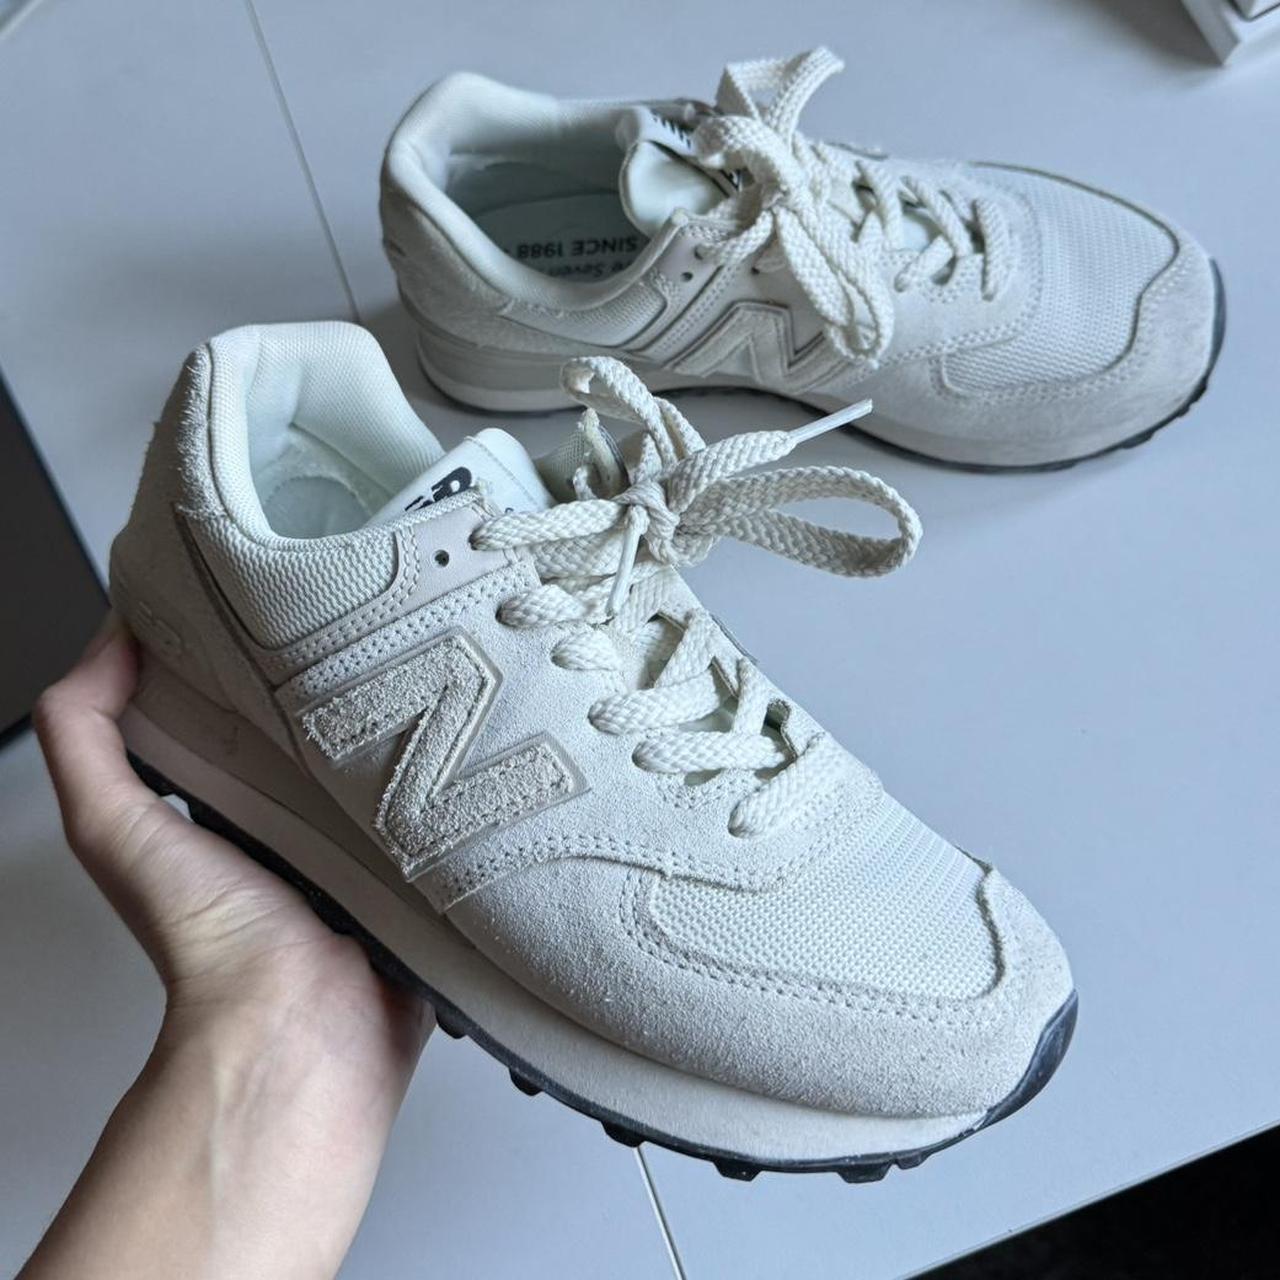 New balance shoes - off white beige color - 4.5y -... - Depop